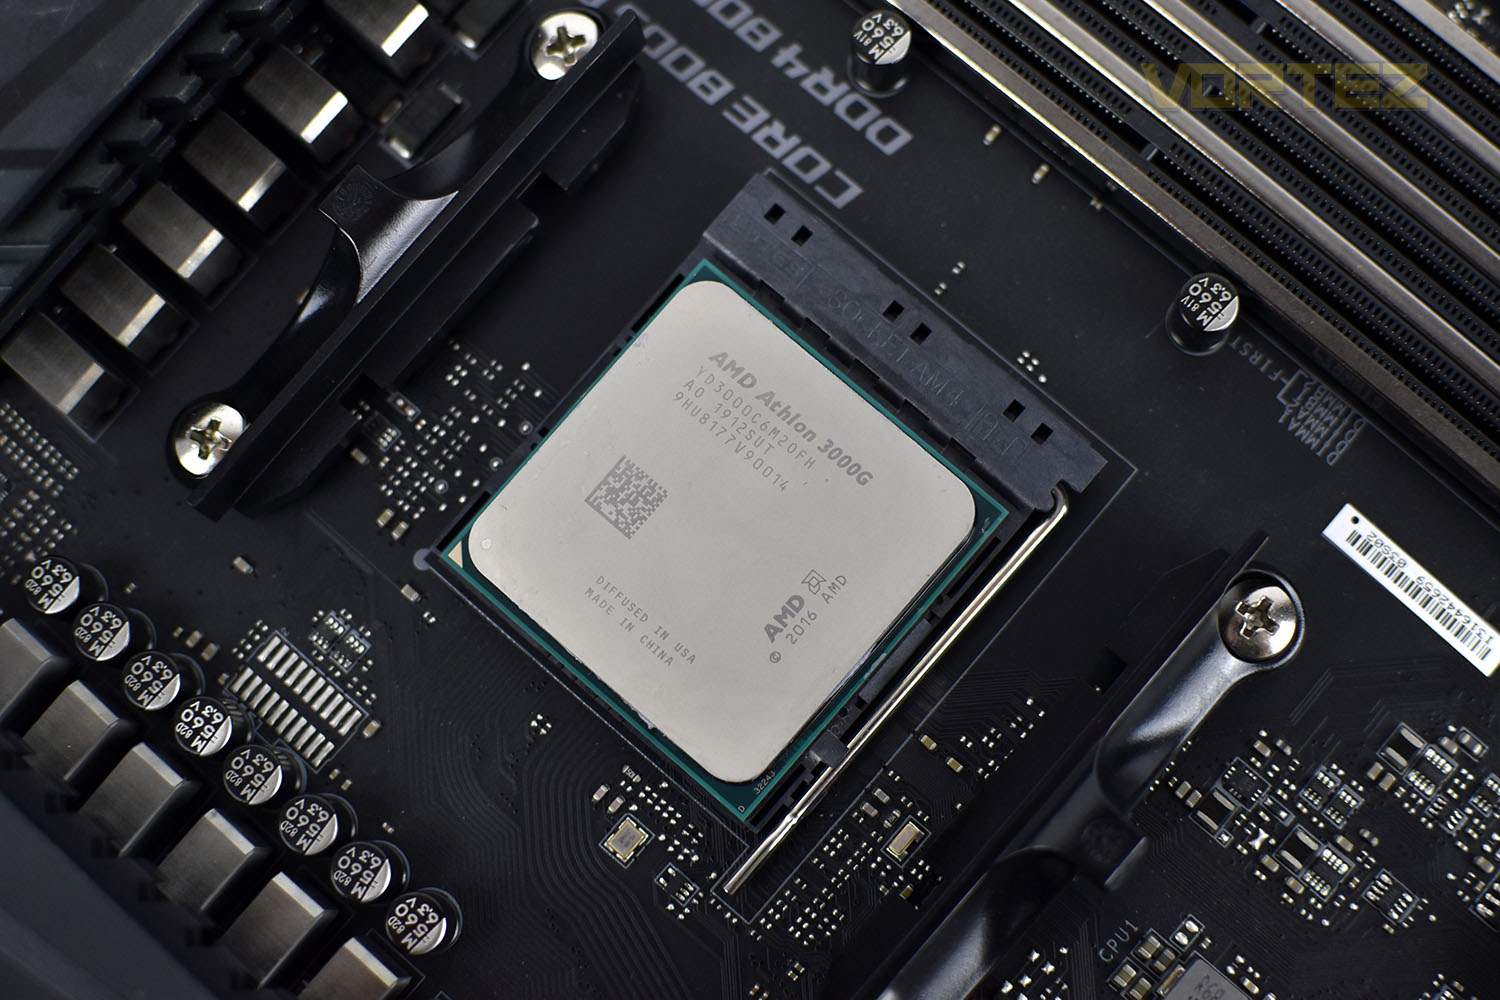 CPU AMD Athlon 3000G (3.5GHz, 2 nhân 4 luồng , 5MB Cache, 35W) - Socket AMD AM4